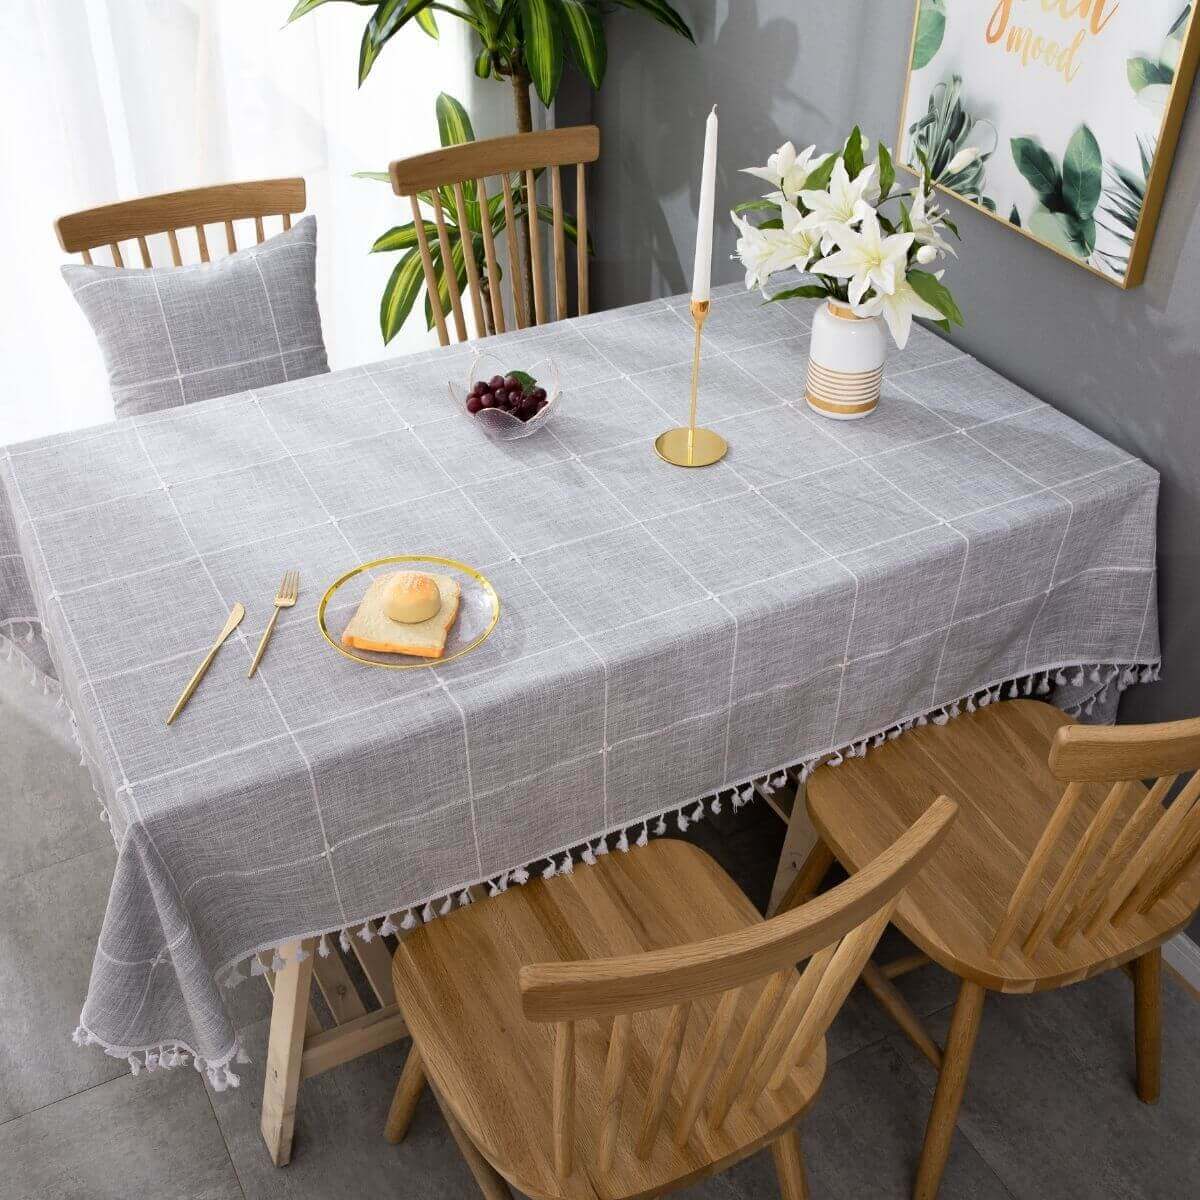 SASTYBALE grey linen tablecloth